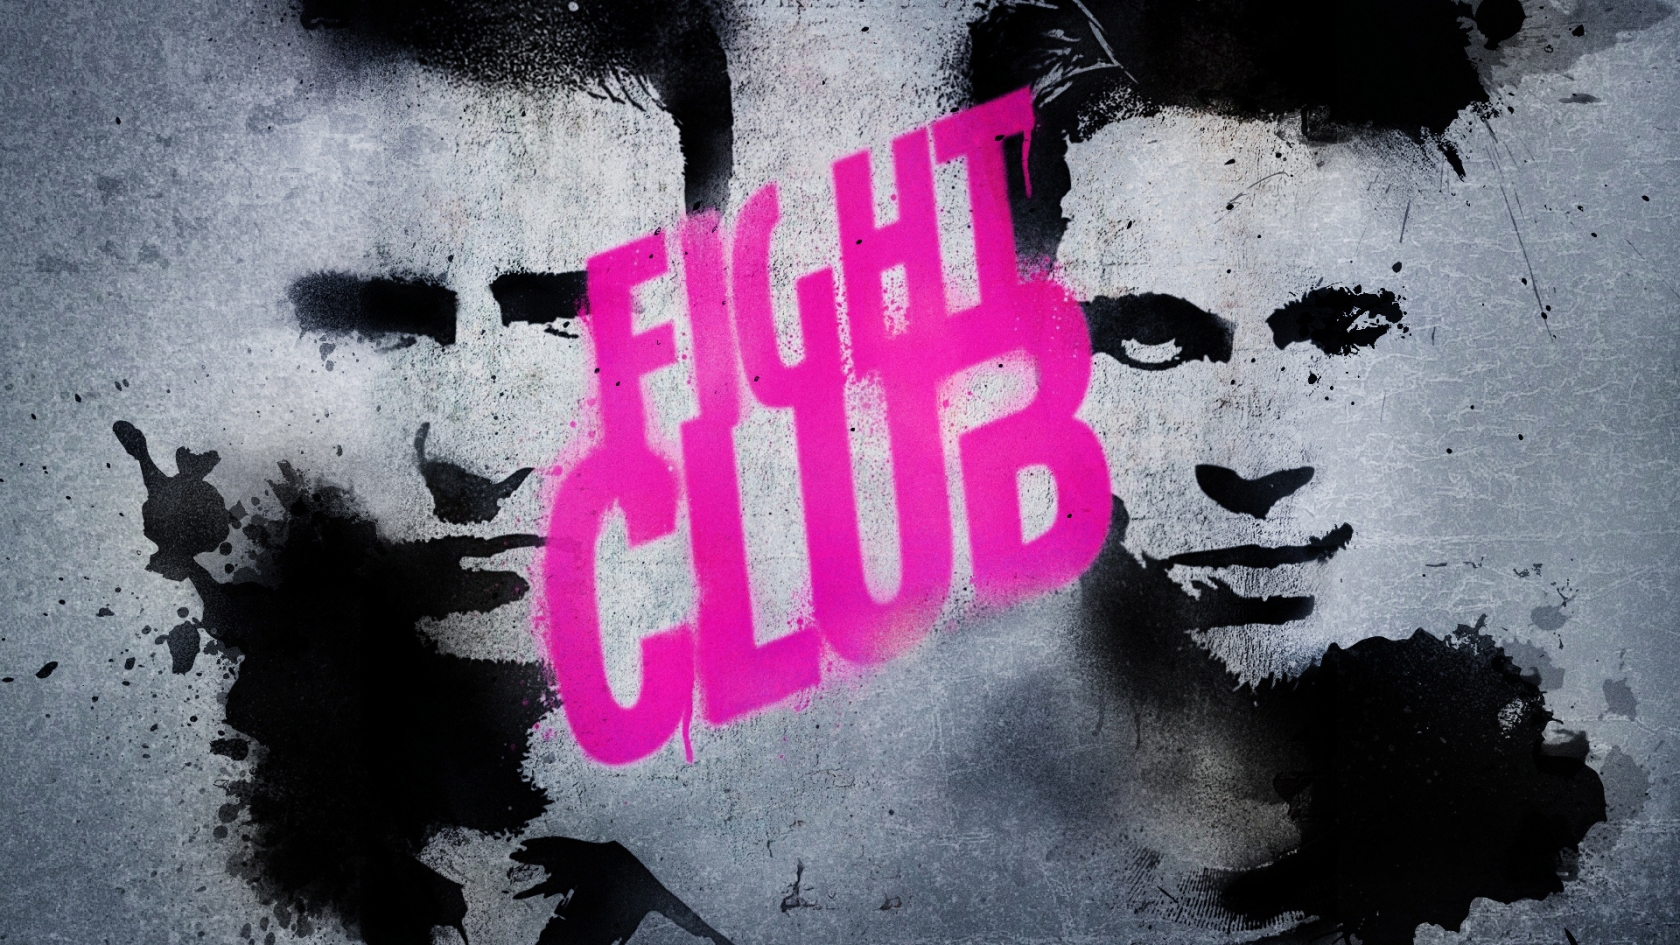 Fight Club Artwork for 1680 x 945 HDTV resolution